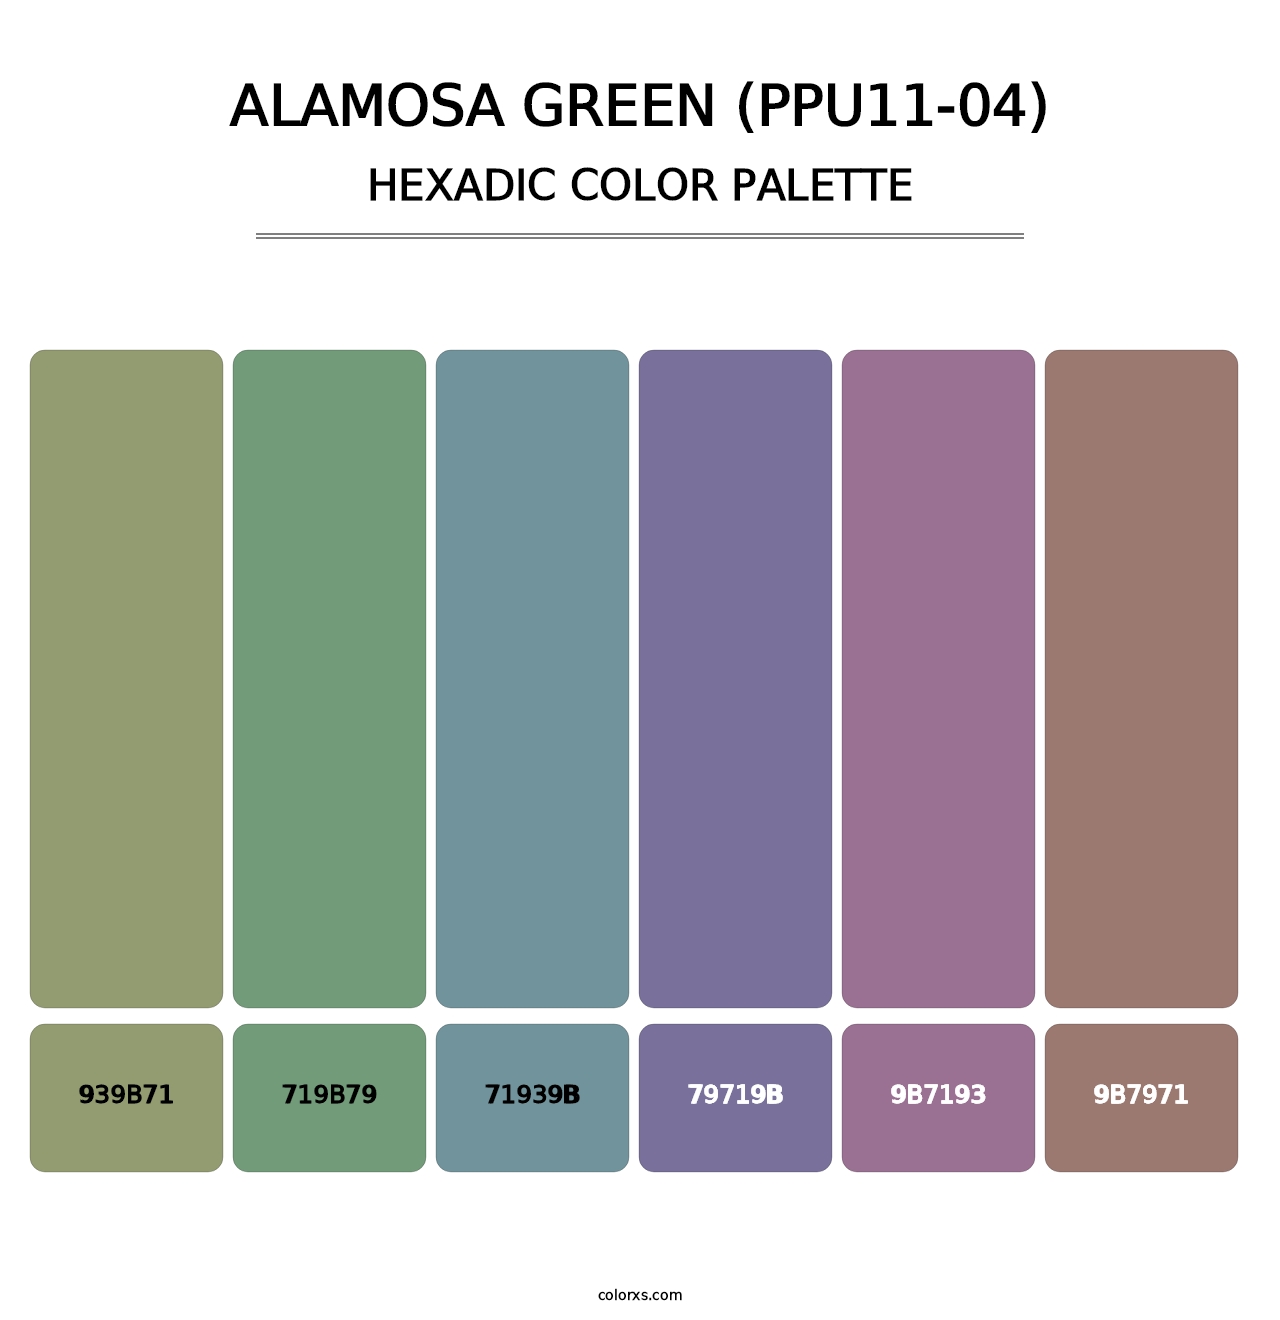 Alamosa Green (PPU11-04) - Hexadic Color Palette